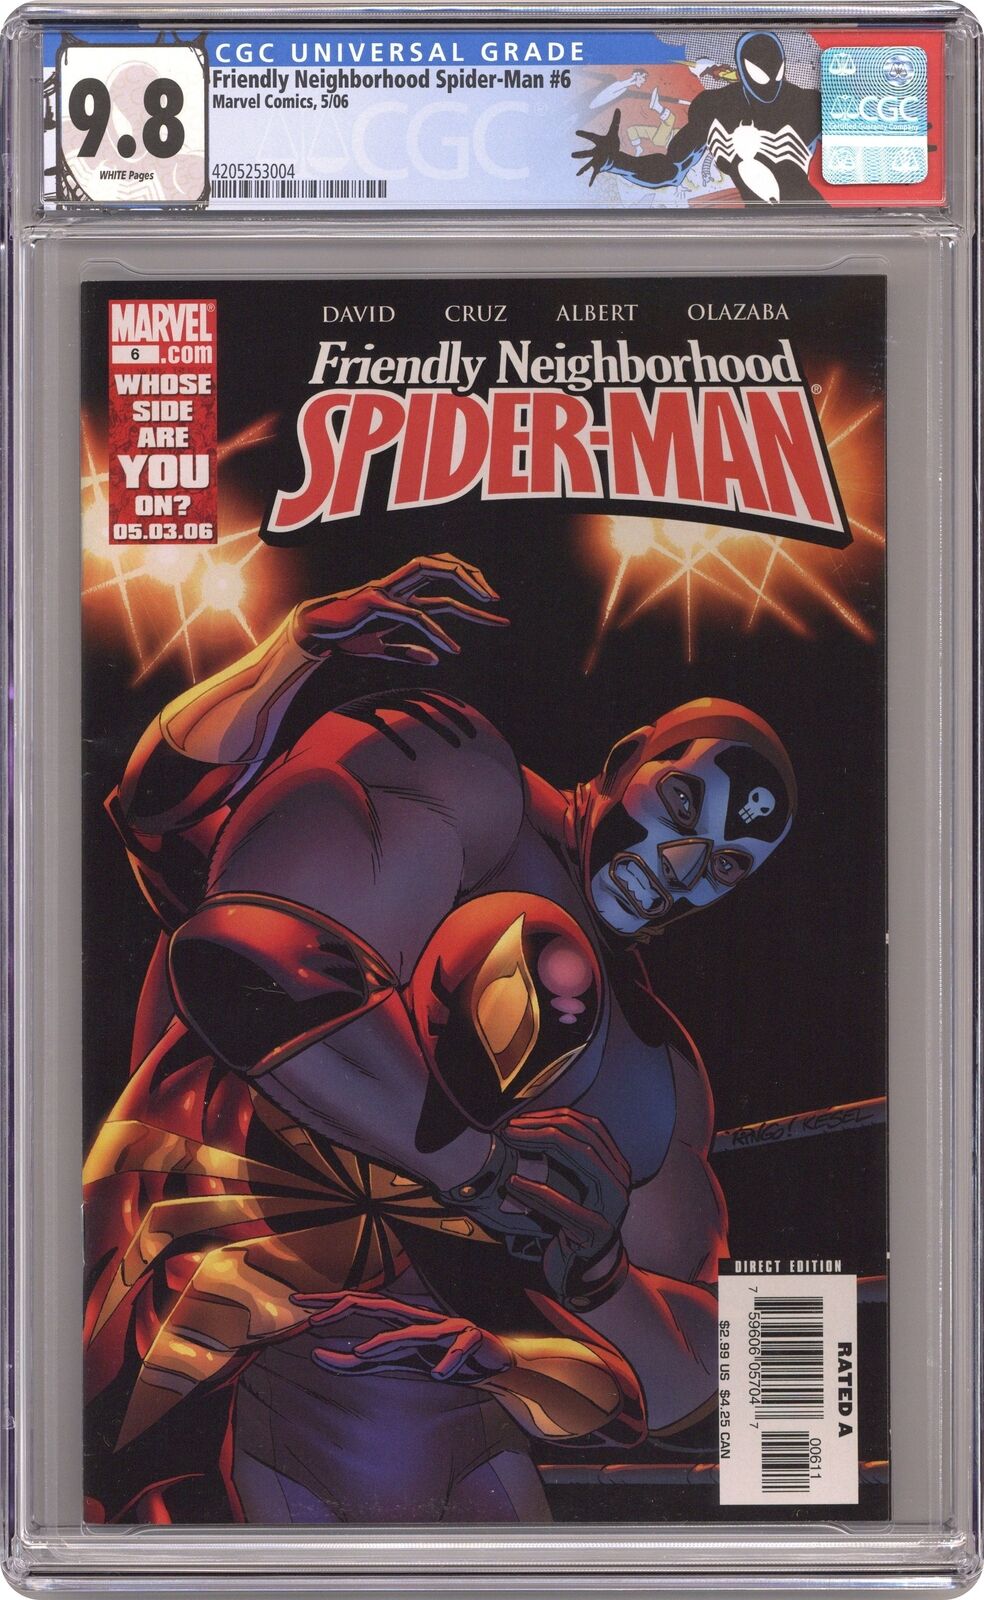 Friendly Neighborhood Spider-Man #6 CGC 9.8 2006 4205253004